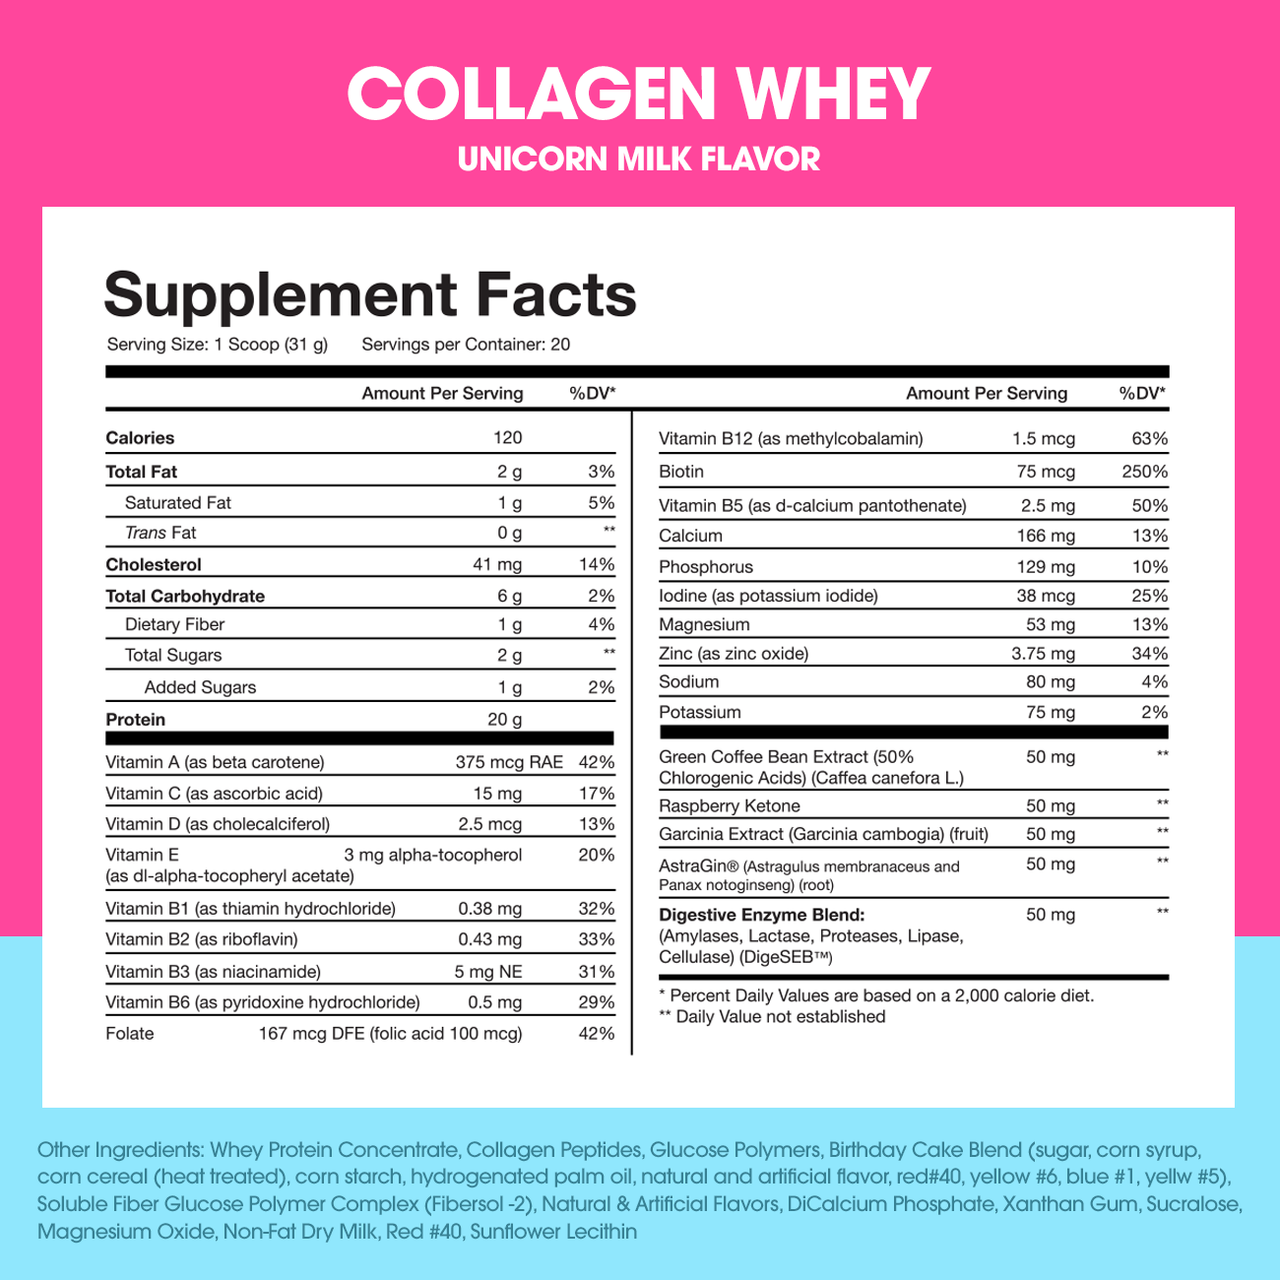 Obvi Collagen Whey Protein Supplement Facts